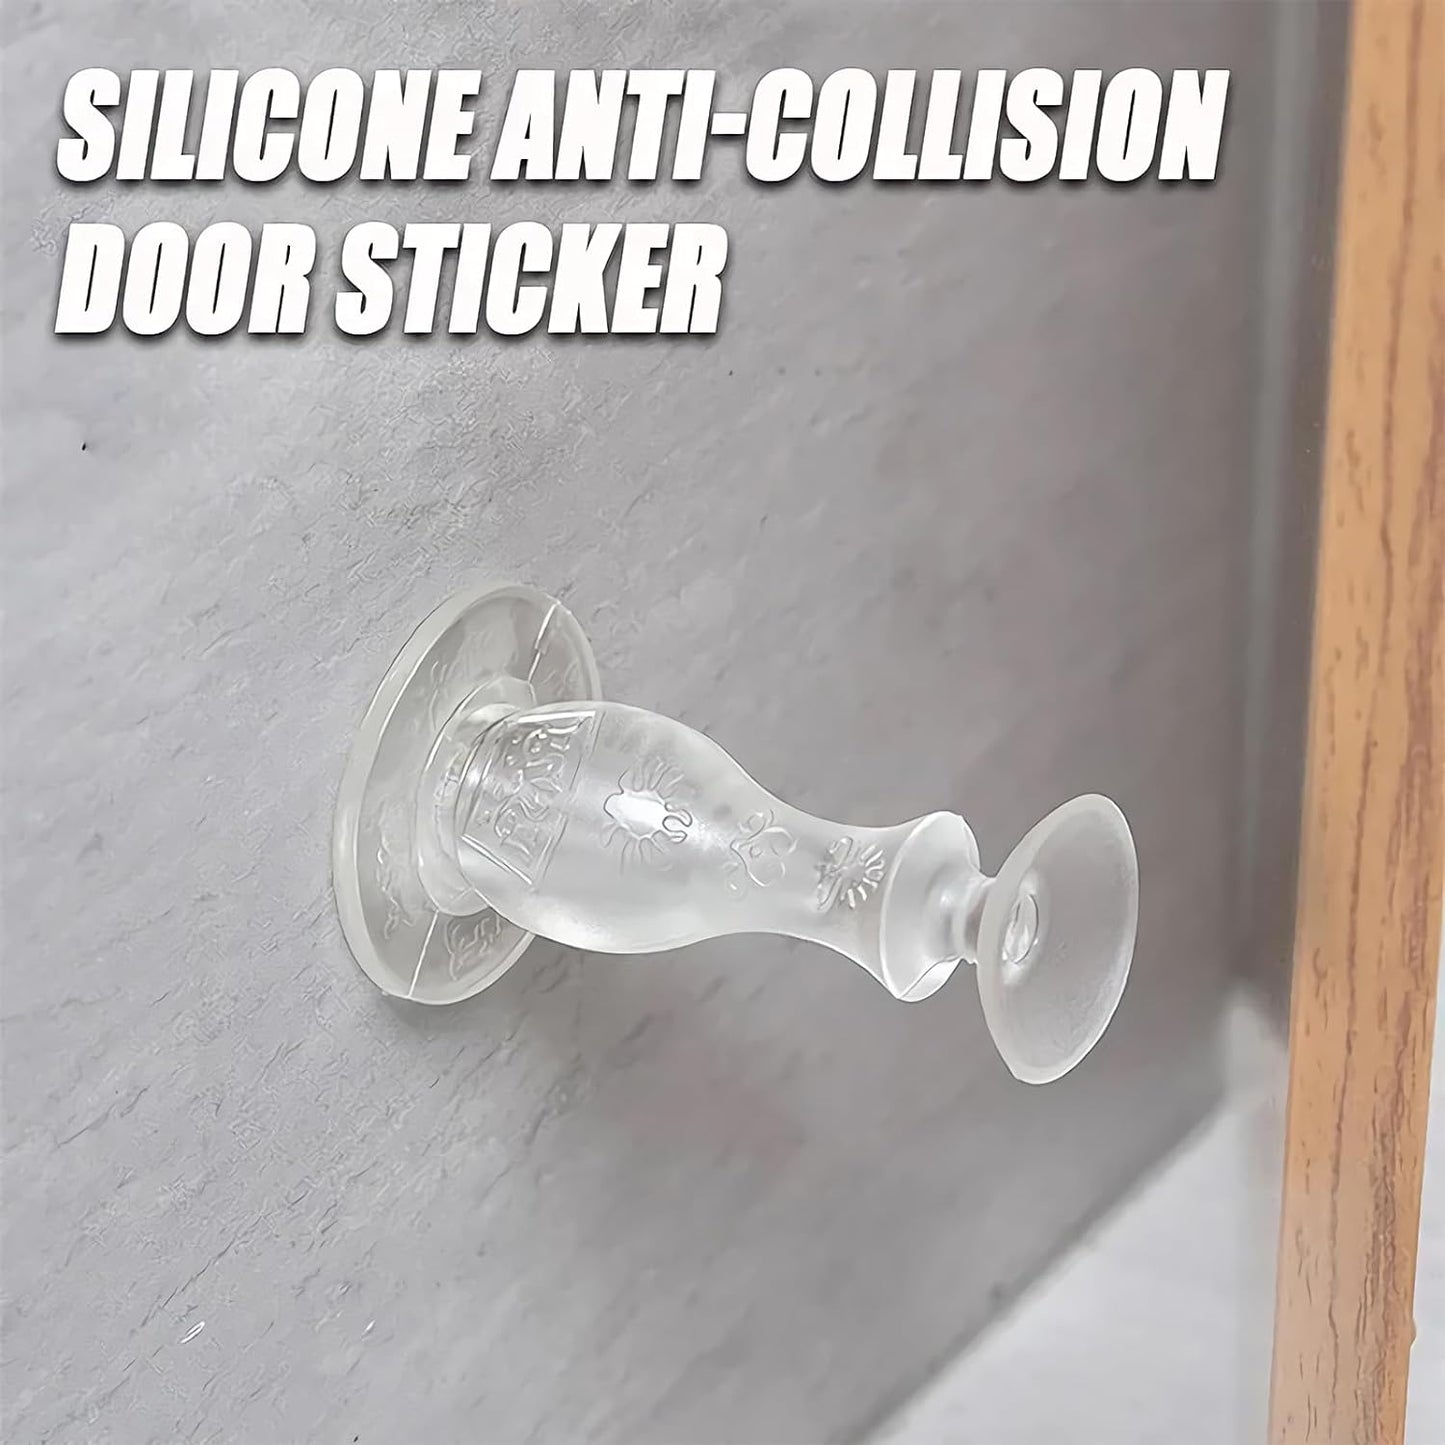 Silicone Nail-Free Door Stop Door Protector